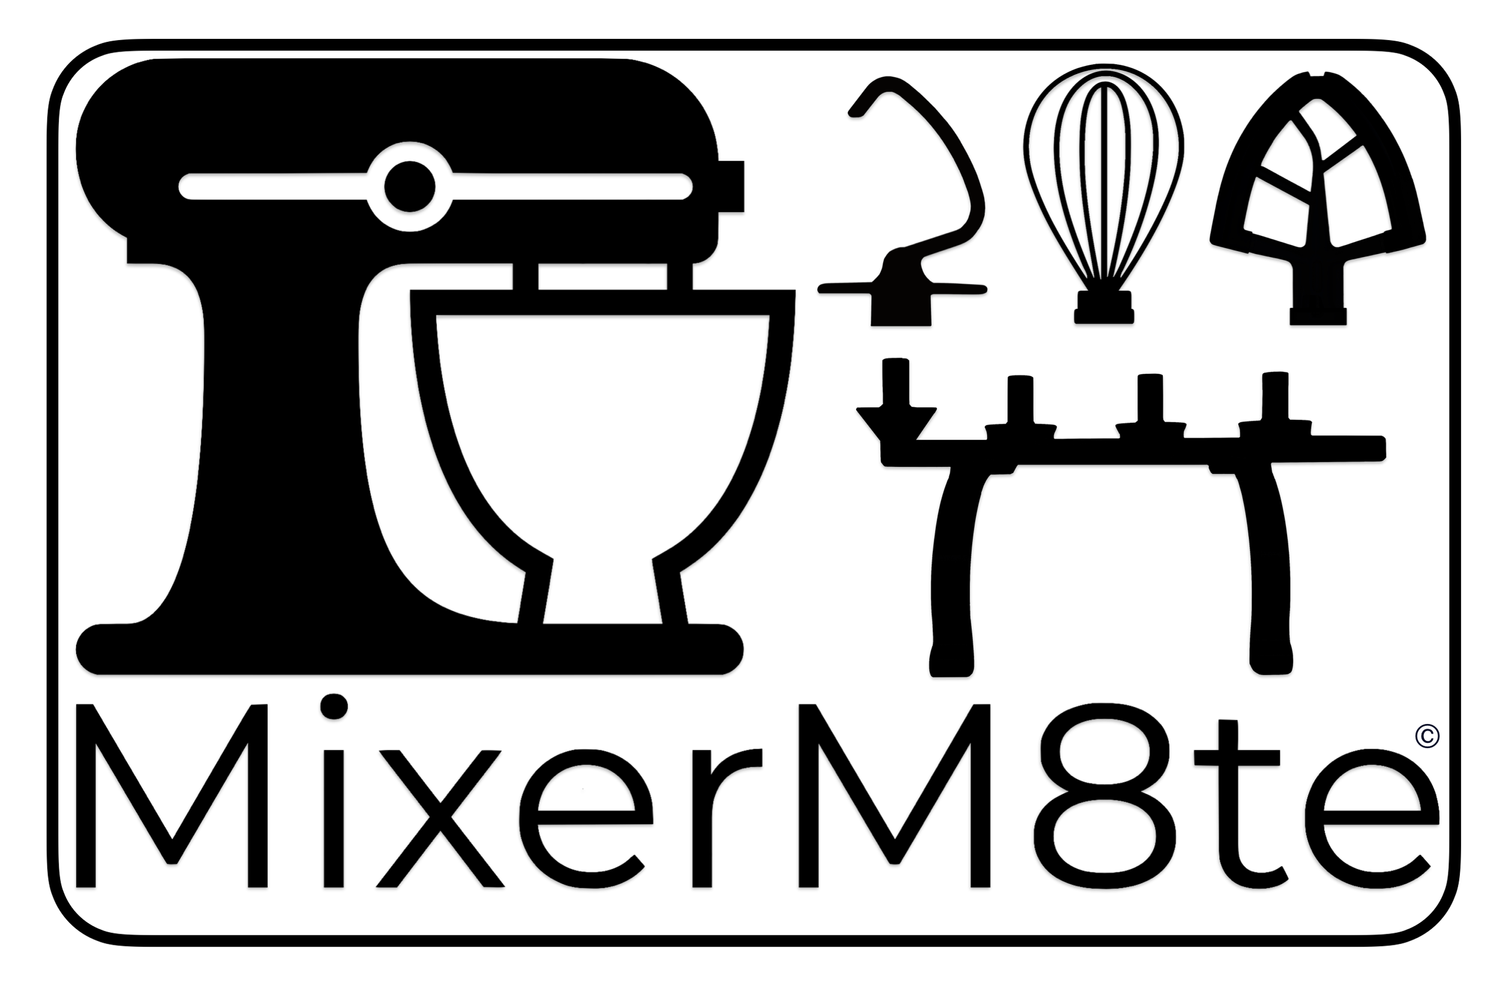 Mixer M8te